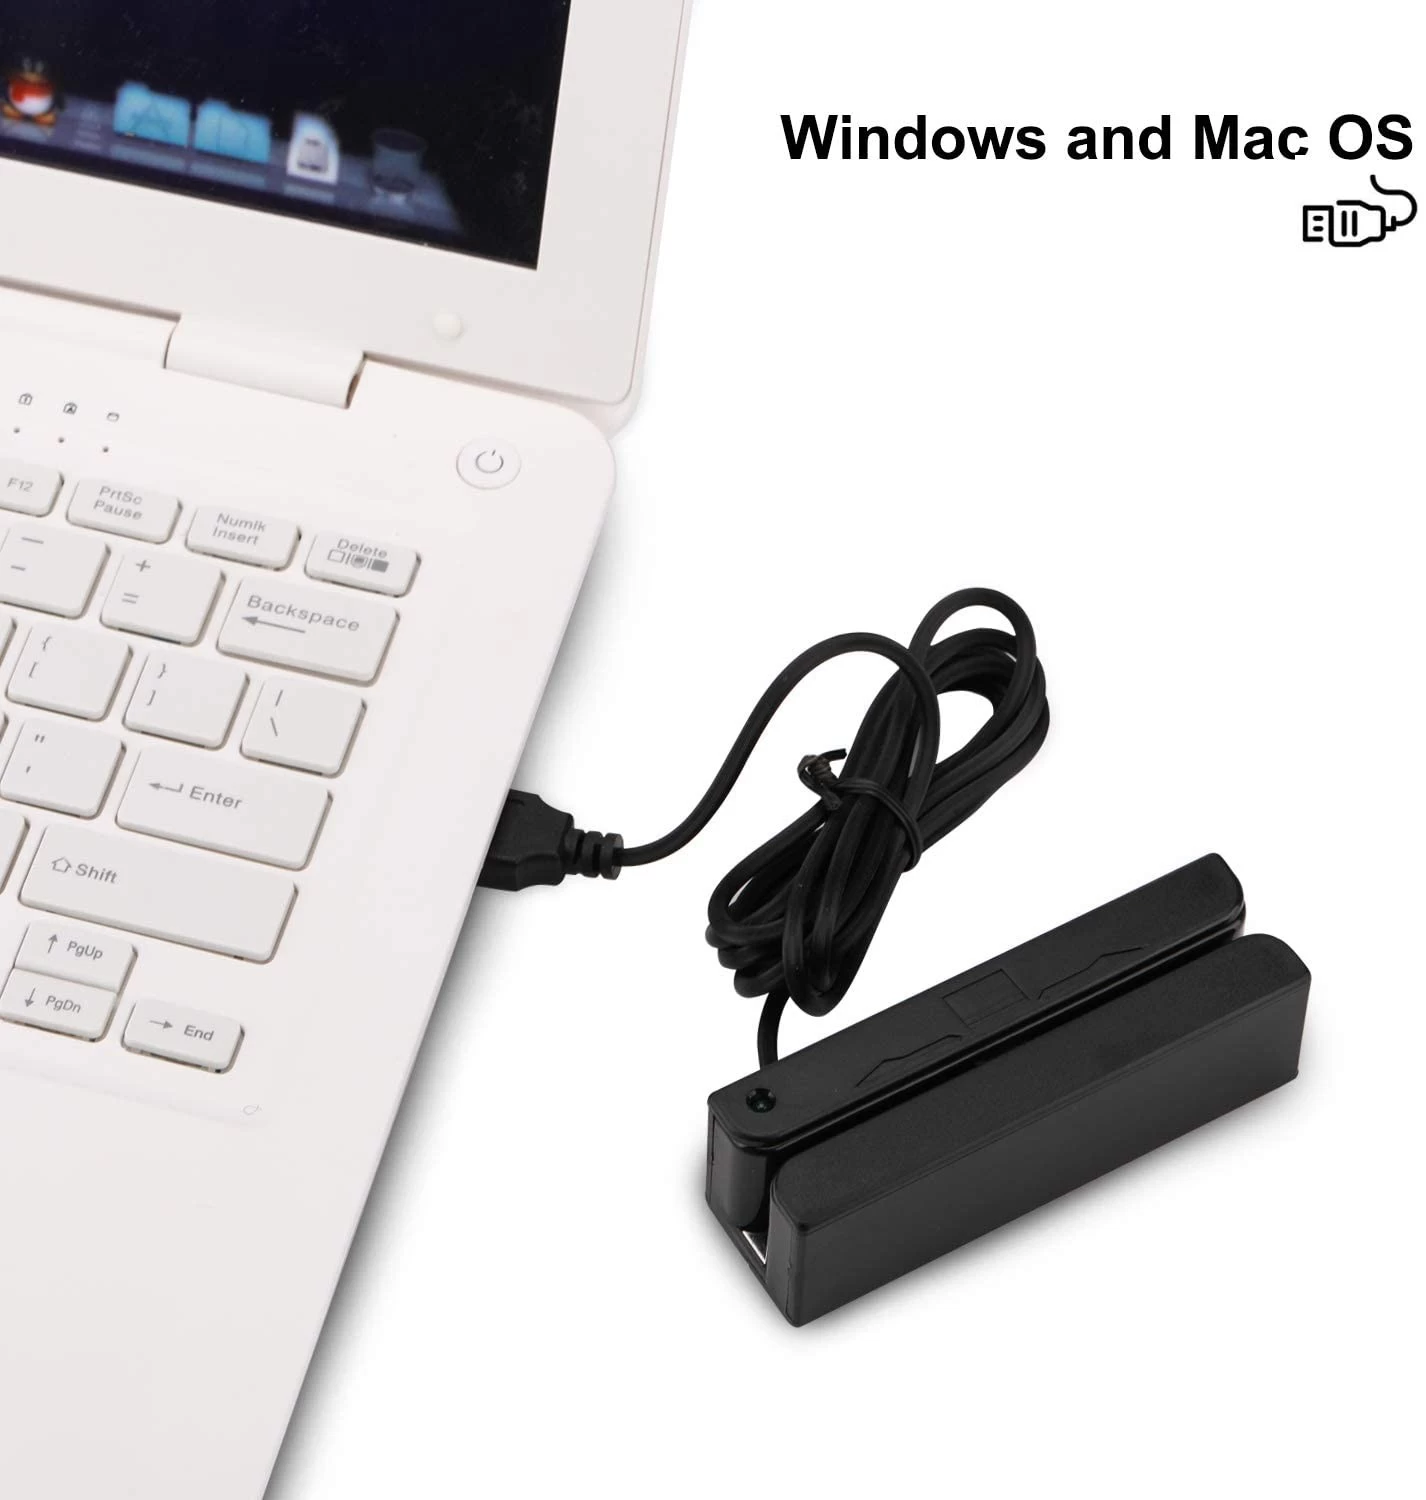 China Portable USB Magnetic Stripe Credit Card Reader 3 Tracks Swipe manufacturer